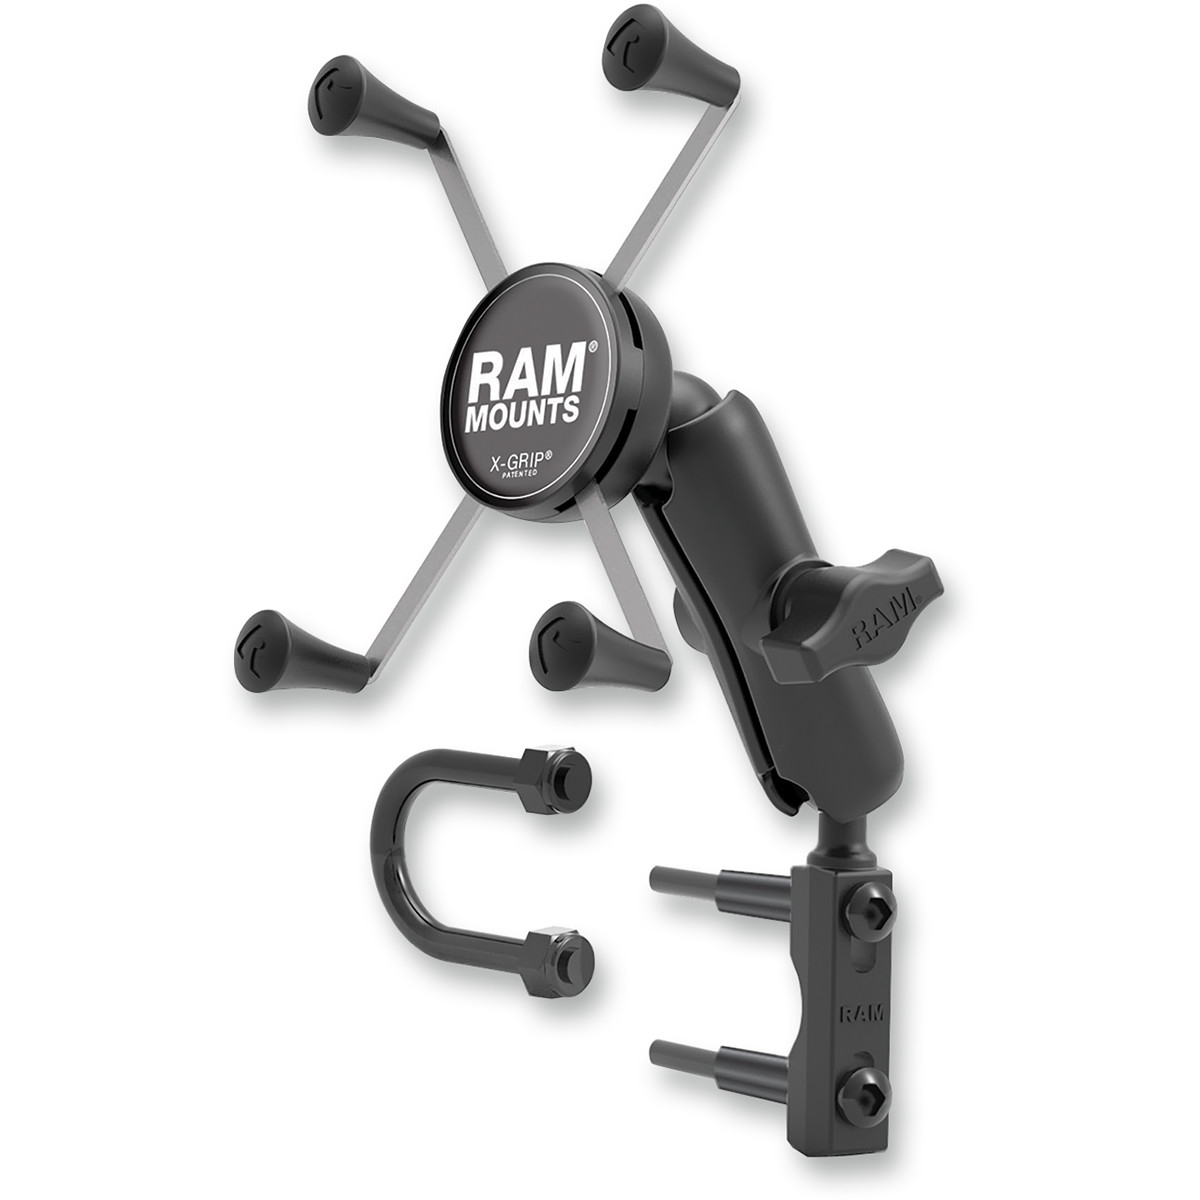 Ram mount